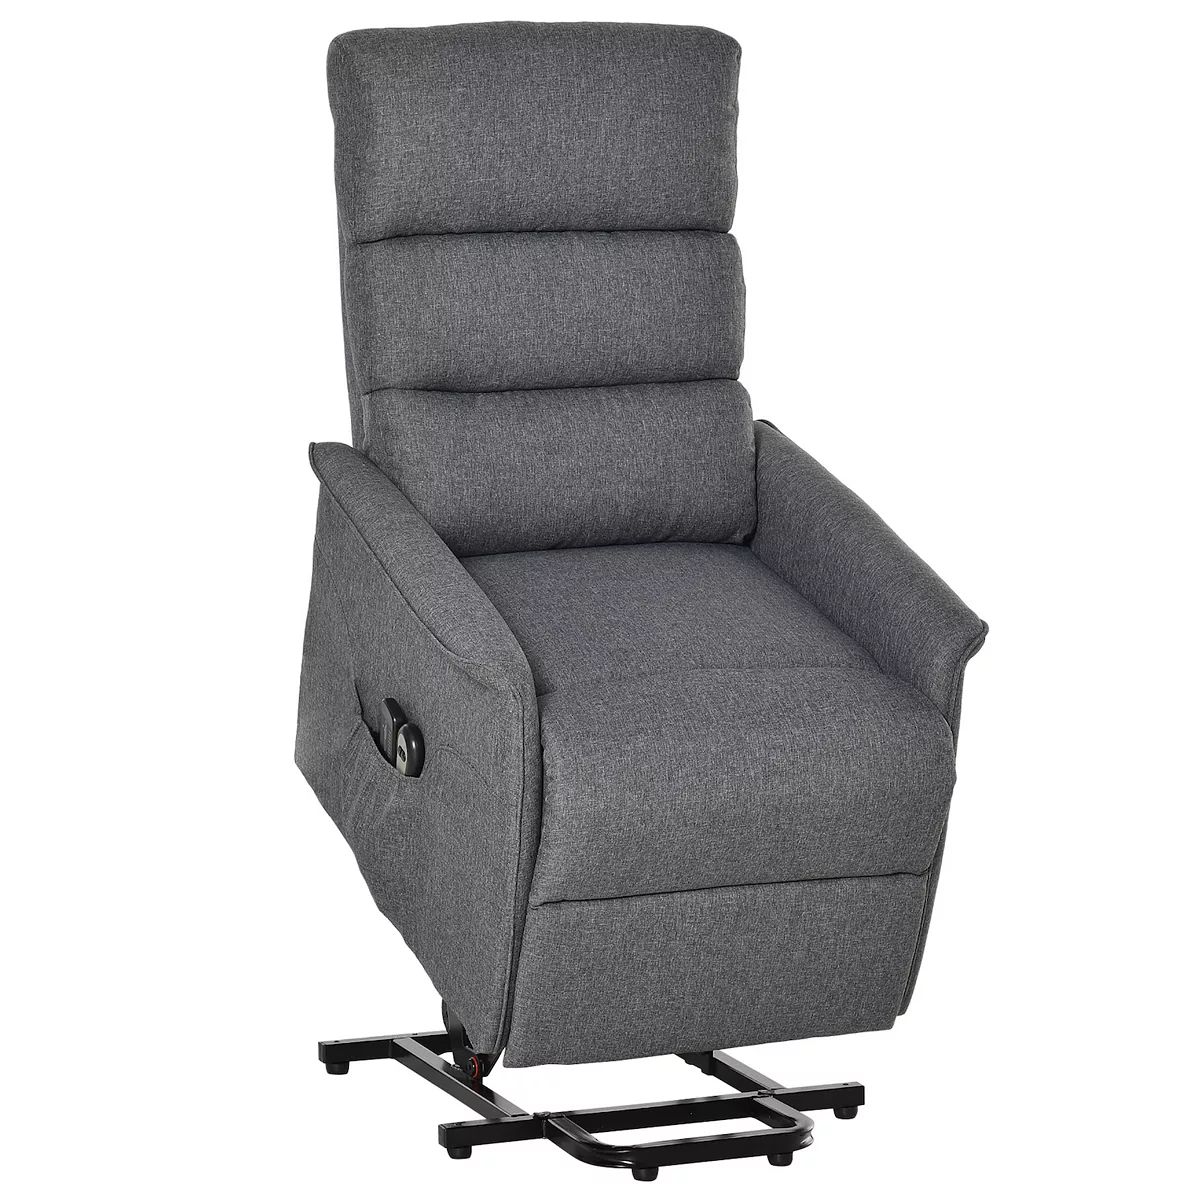 HOMCOM Electric Lift Recliner Massage Chair Vibration Living Room Office Furniture Grey | Kohl's